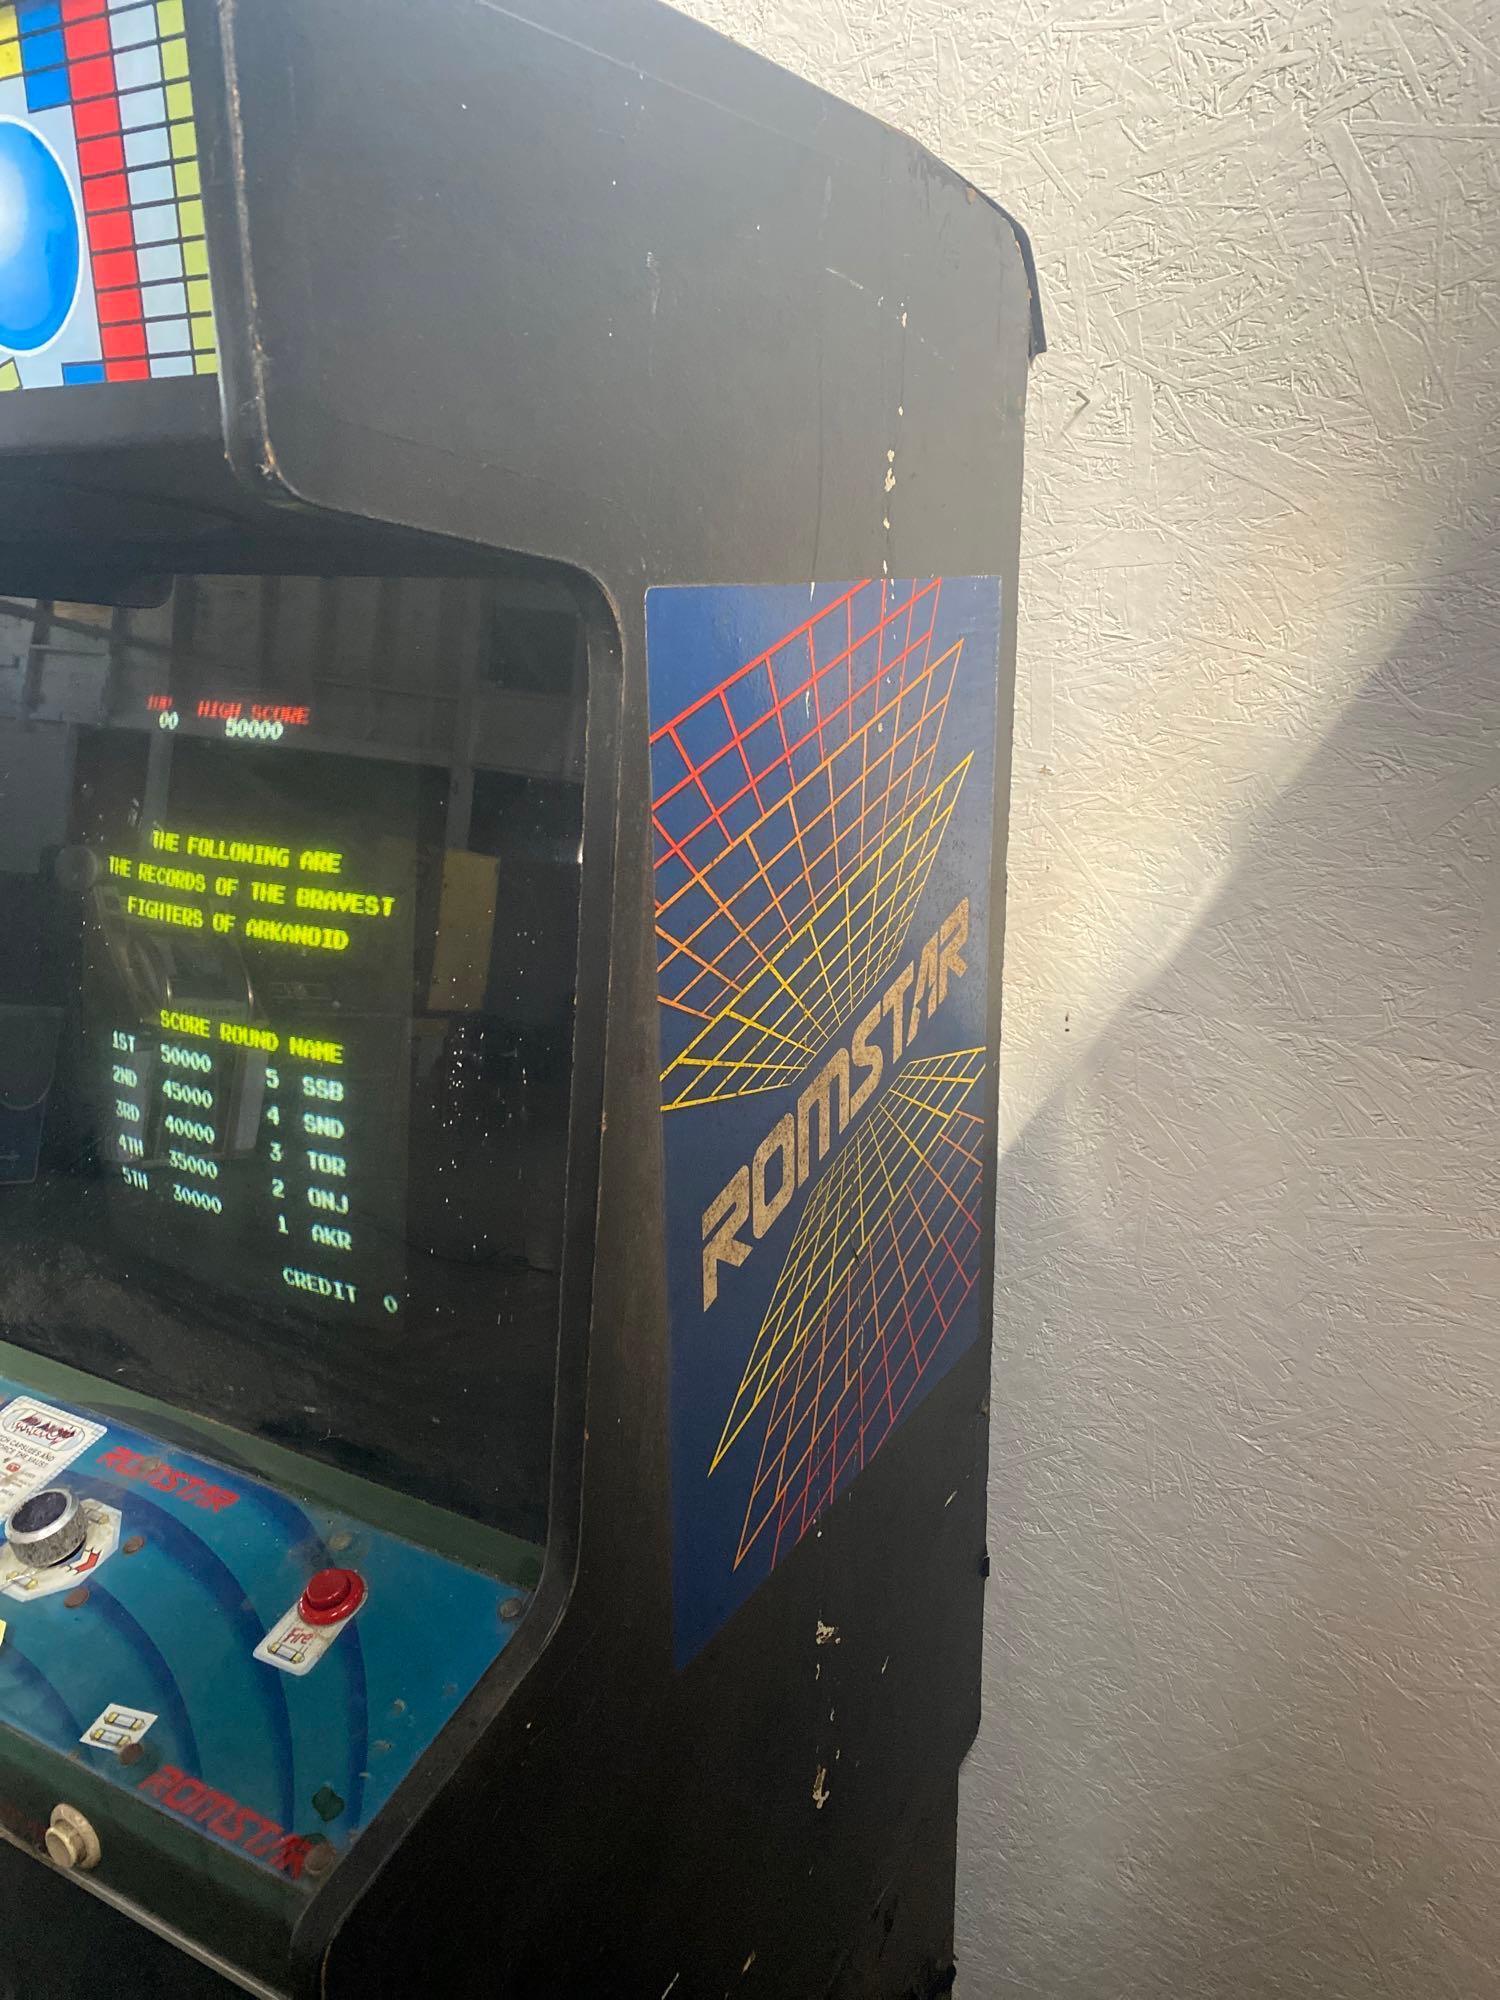 Romstar Arkanoid arcade game